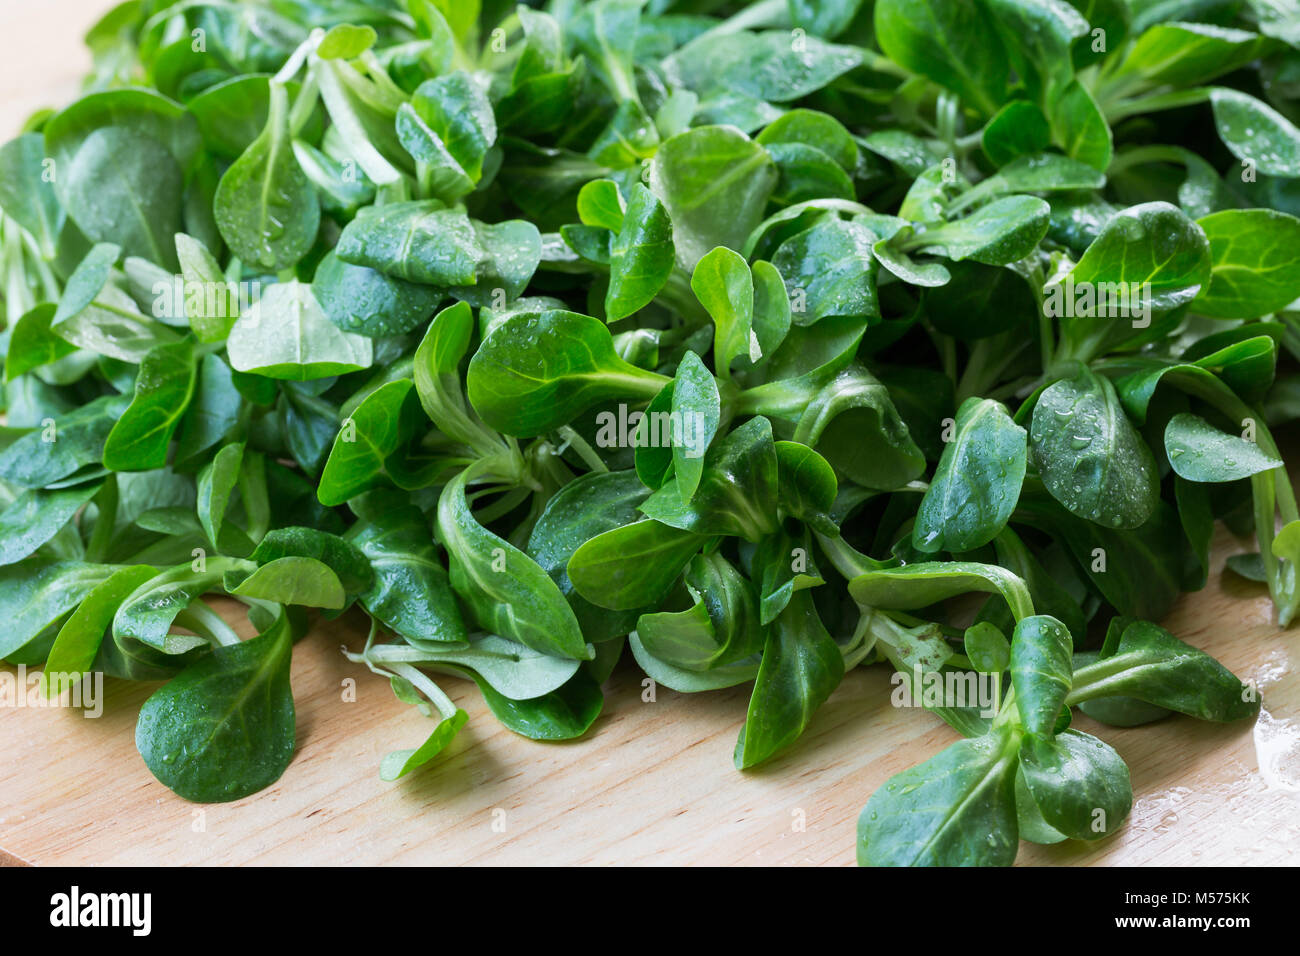 Fresh lamb lettuce corn salad on wooden table. Green lettuce leaves (Valerianella locusta) Stock Photo